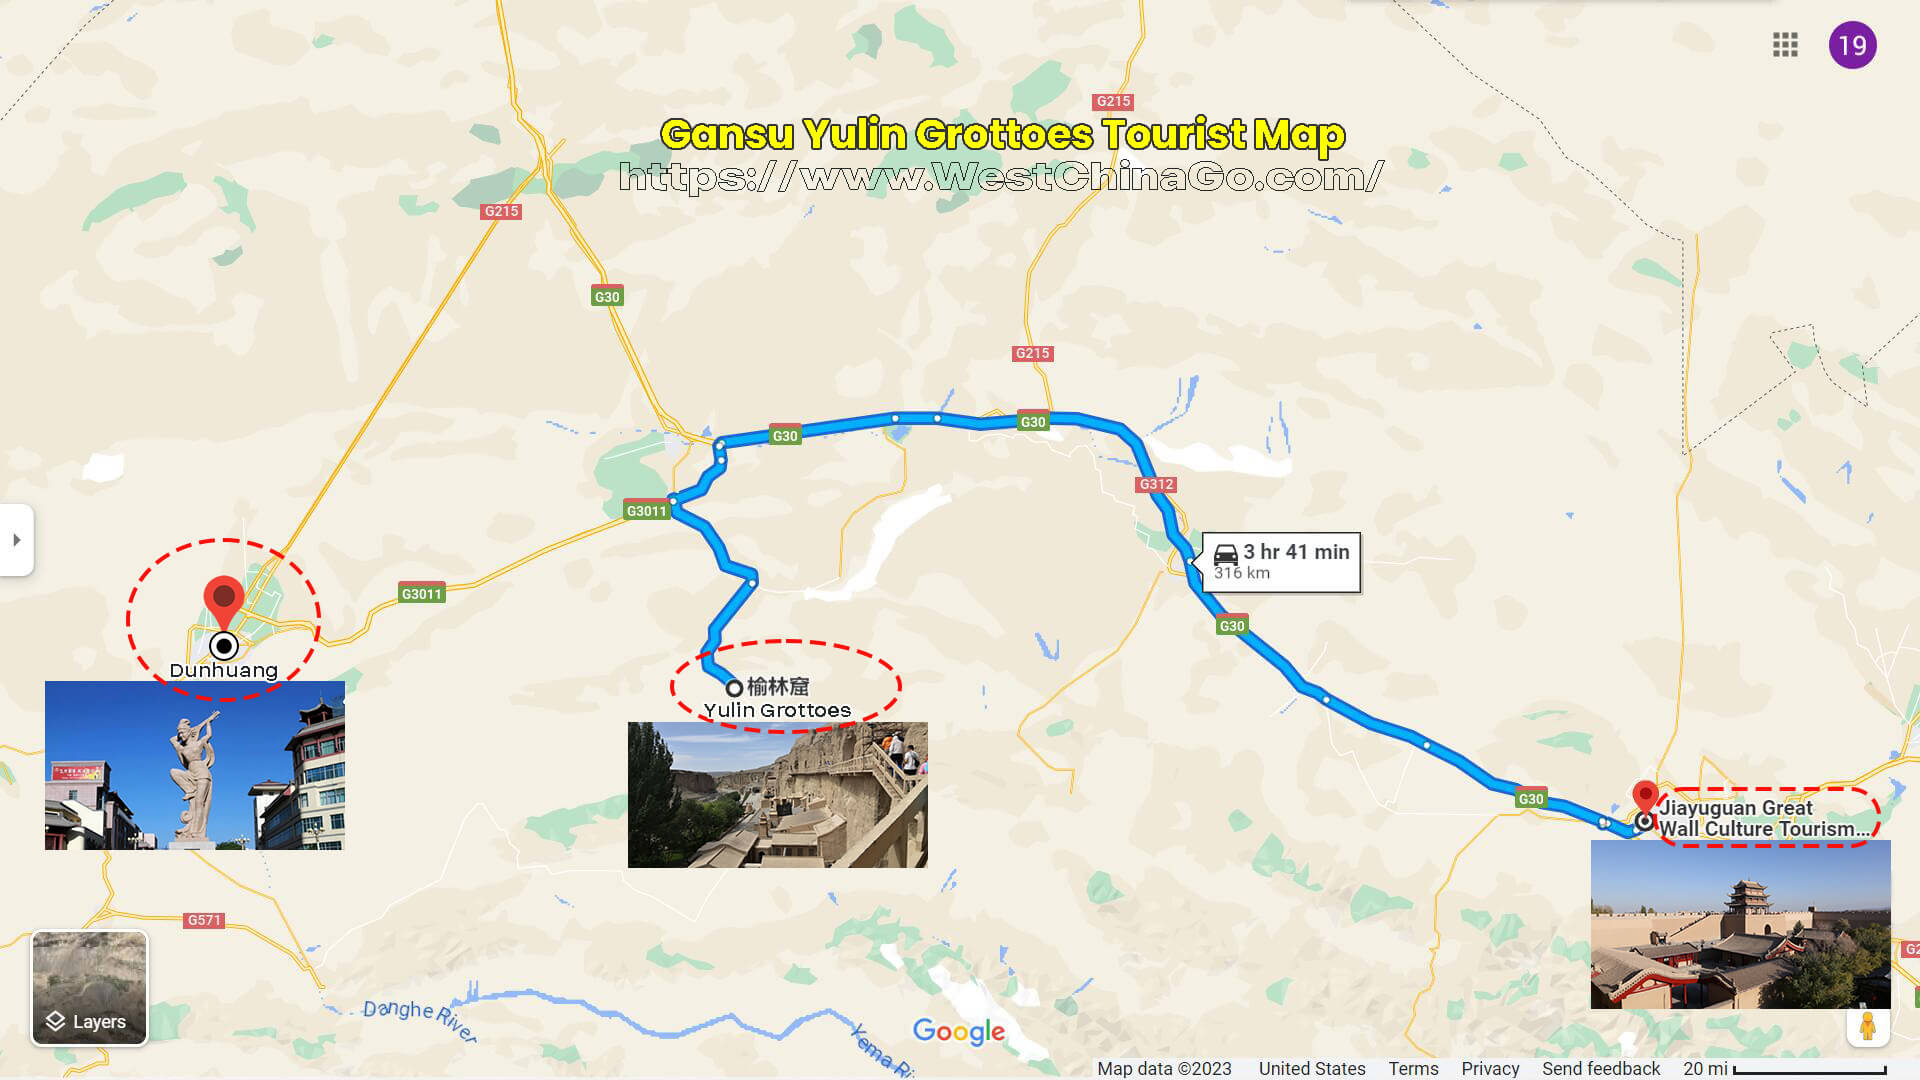 Gansu Yulin Grottoes Tourist Map